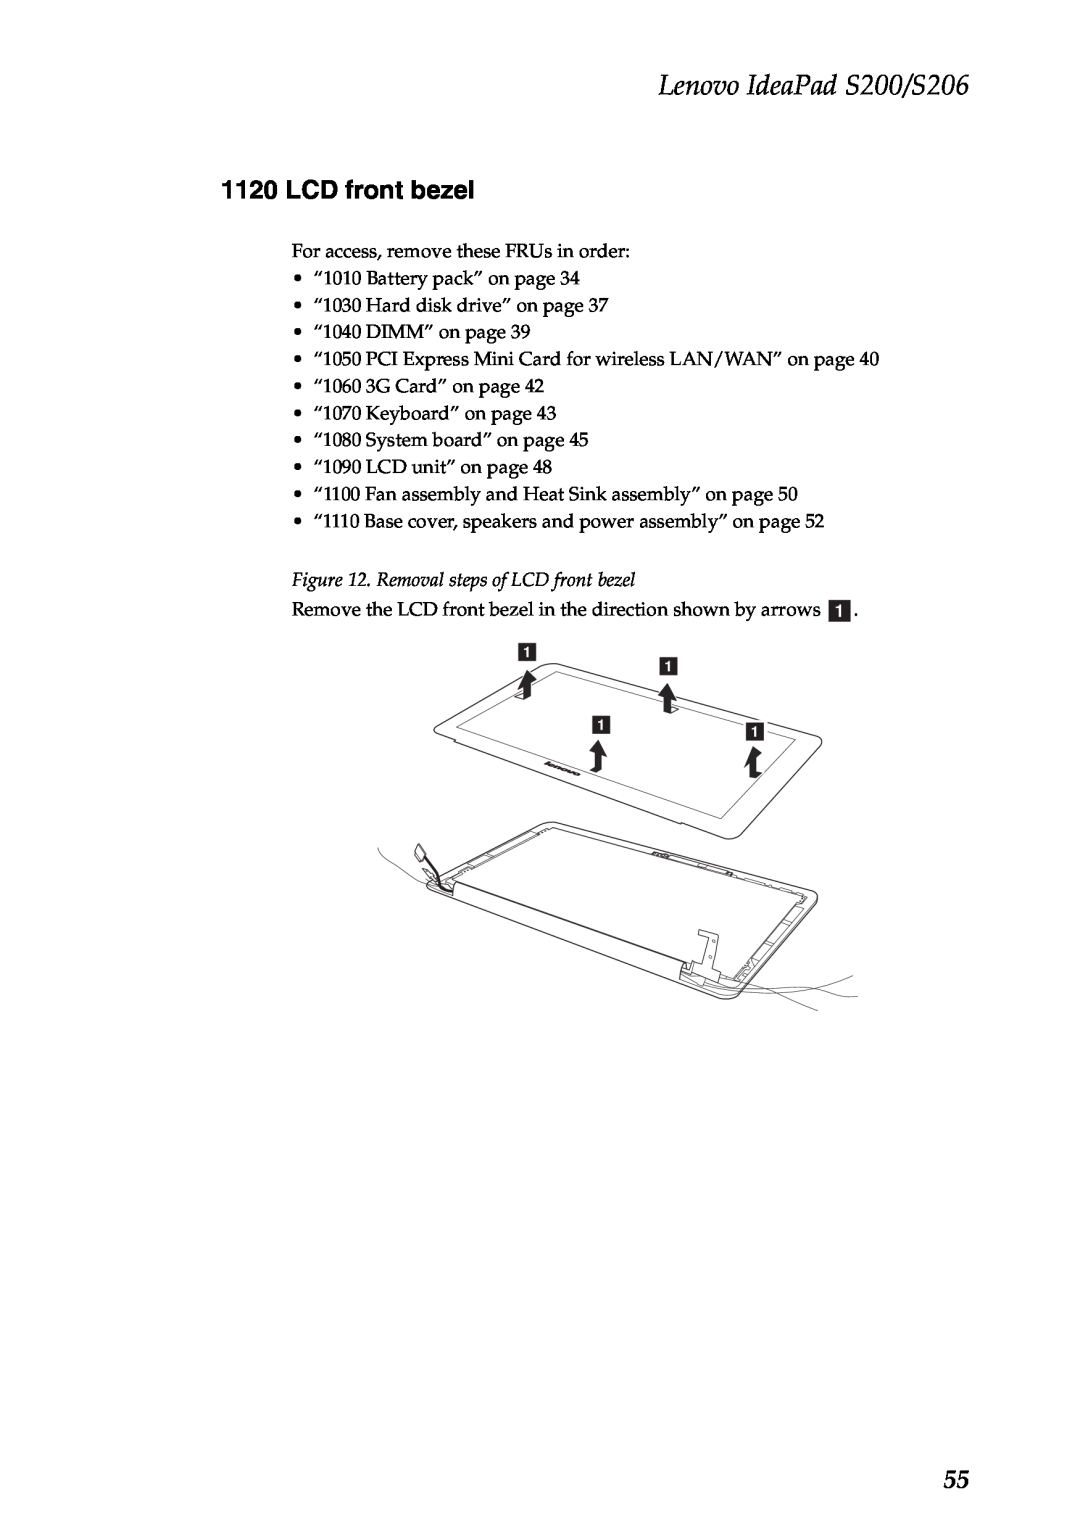 Lenovo manual Removal steps of LCD front bezel, Lenovo IdeaPad S200/S206 